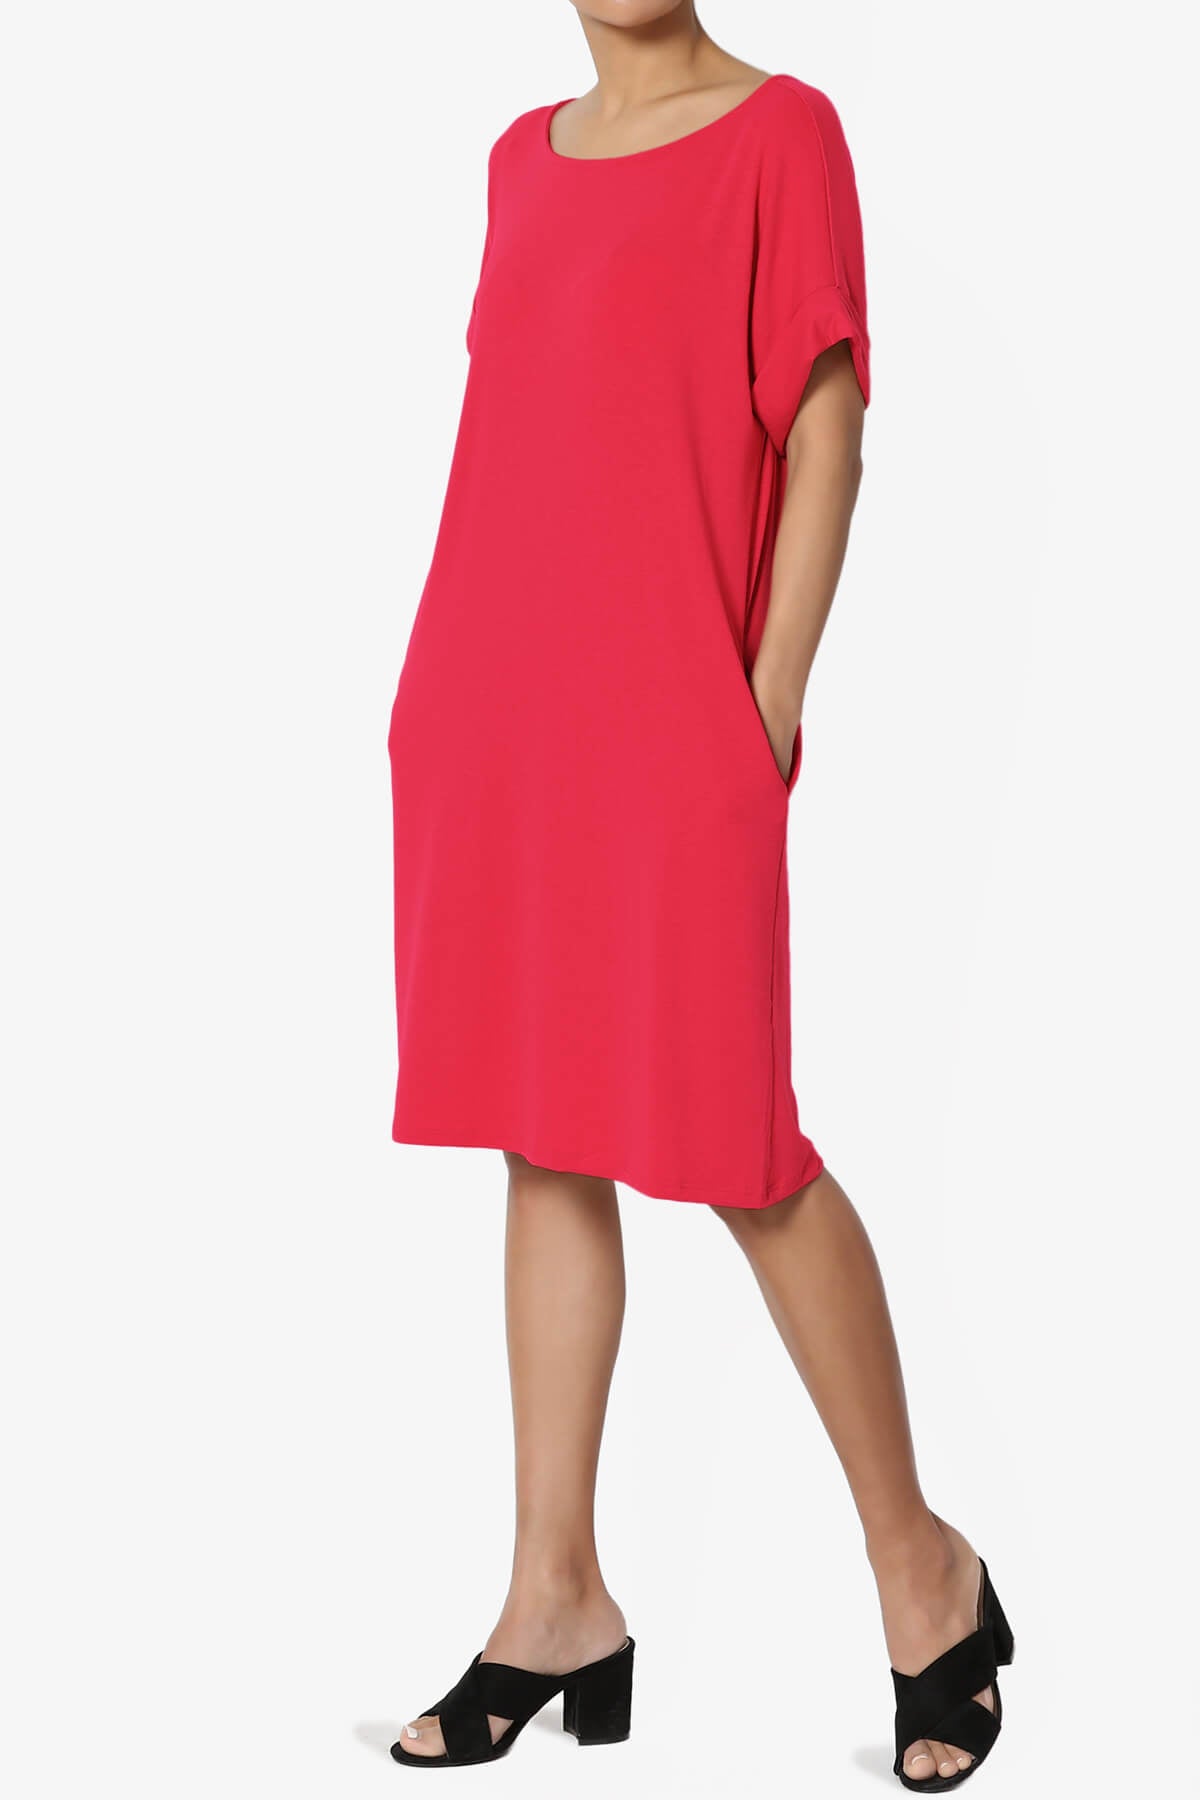 Janie Rolled Short Sleeve Round Neck Dress RED_3